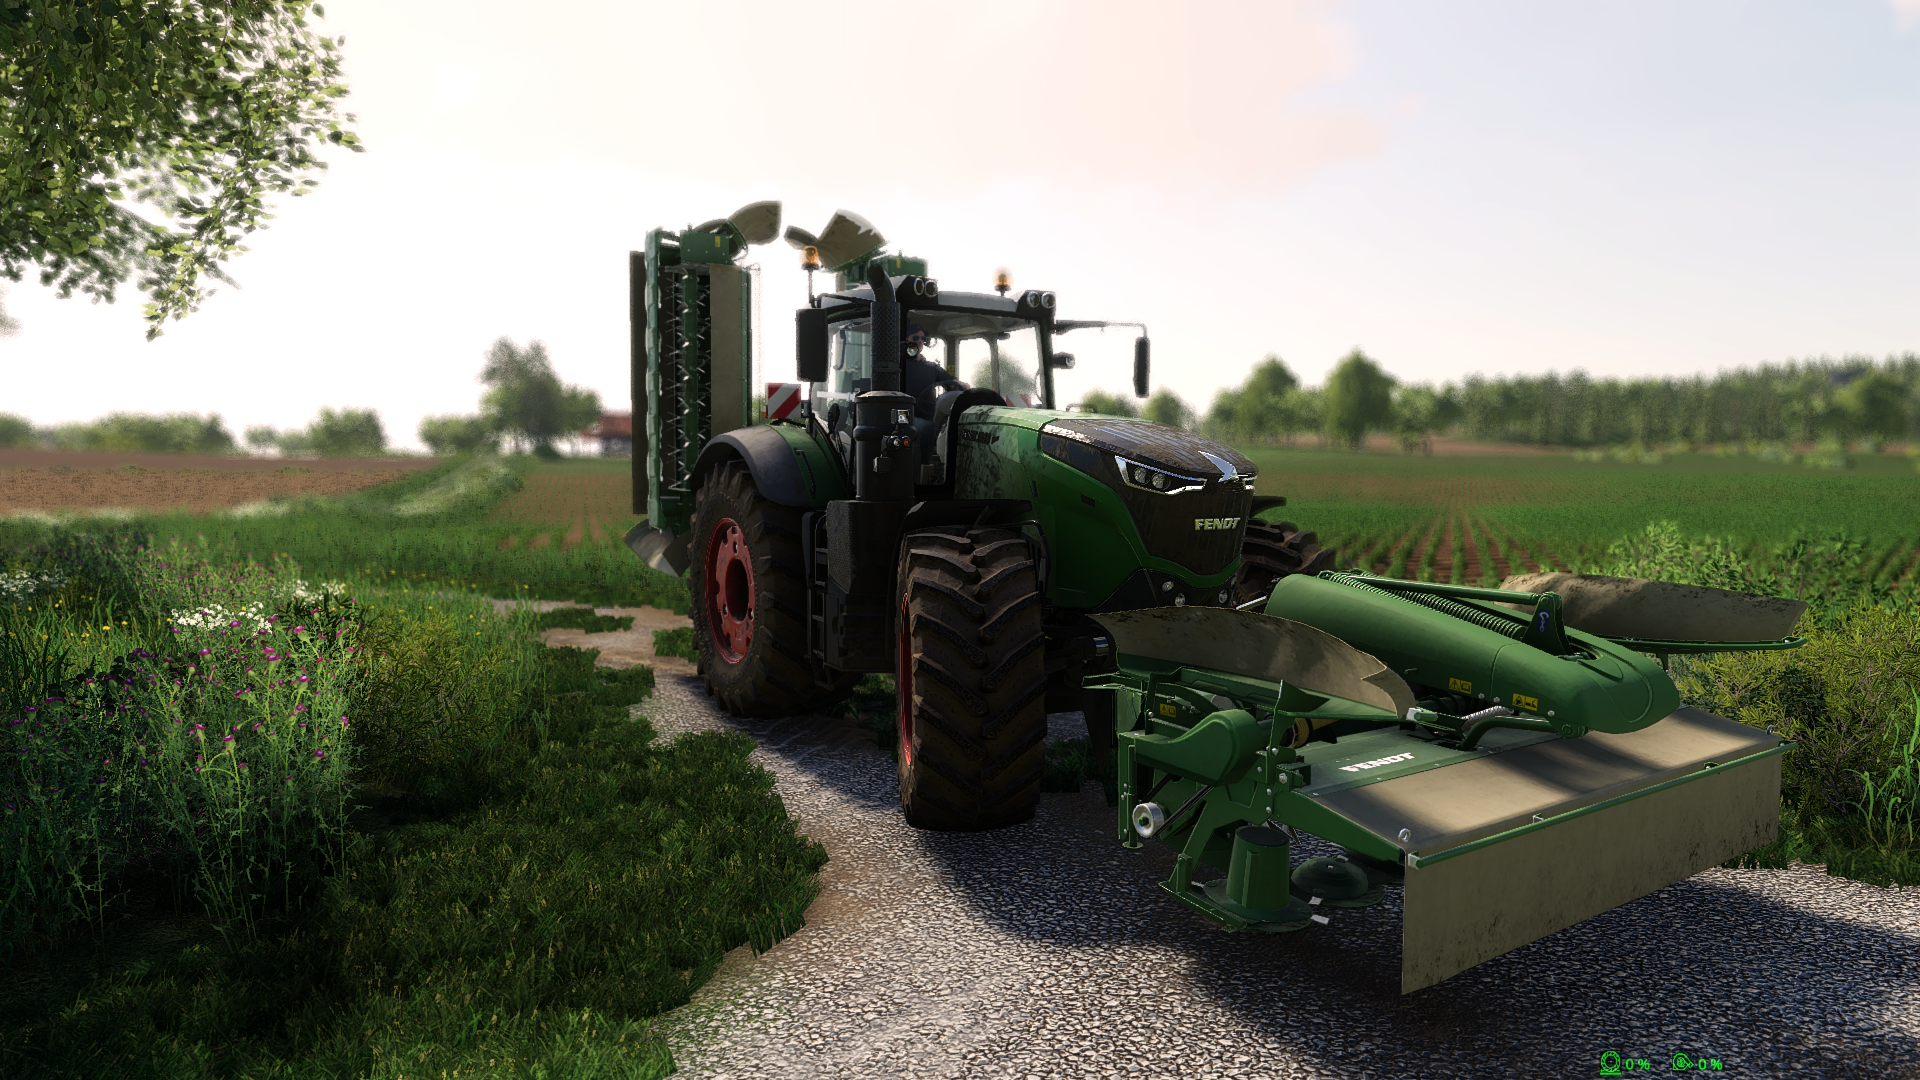 General 1920x1080 fs19 farming farm tractors Harvest farming simulator PC gaming vehicle screen shot